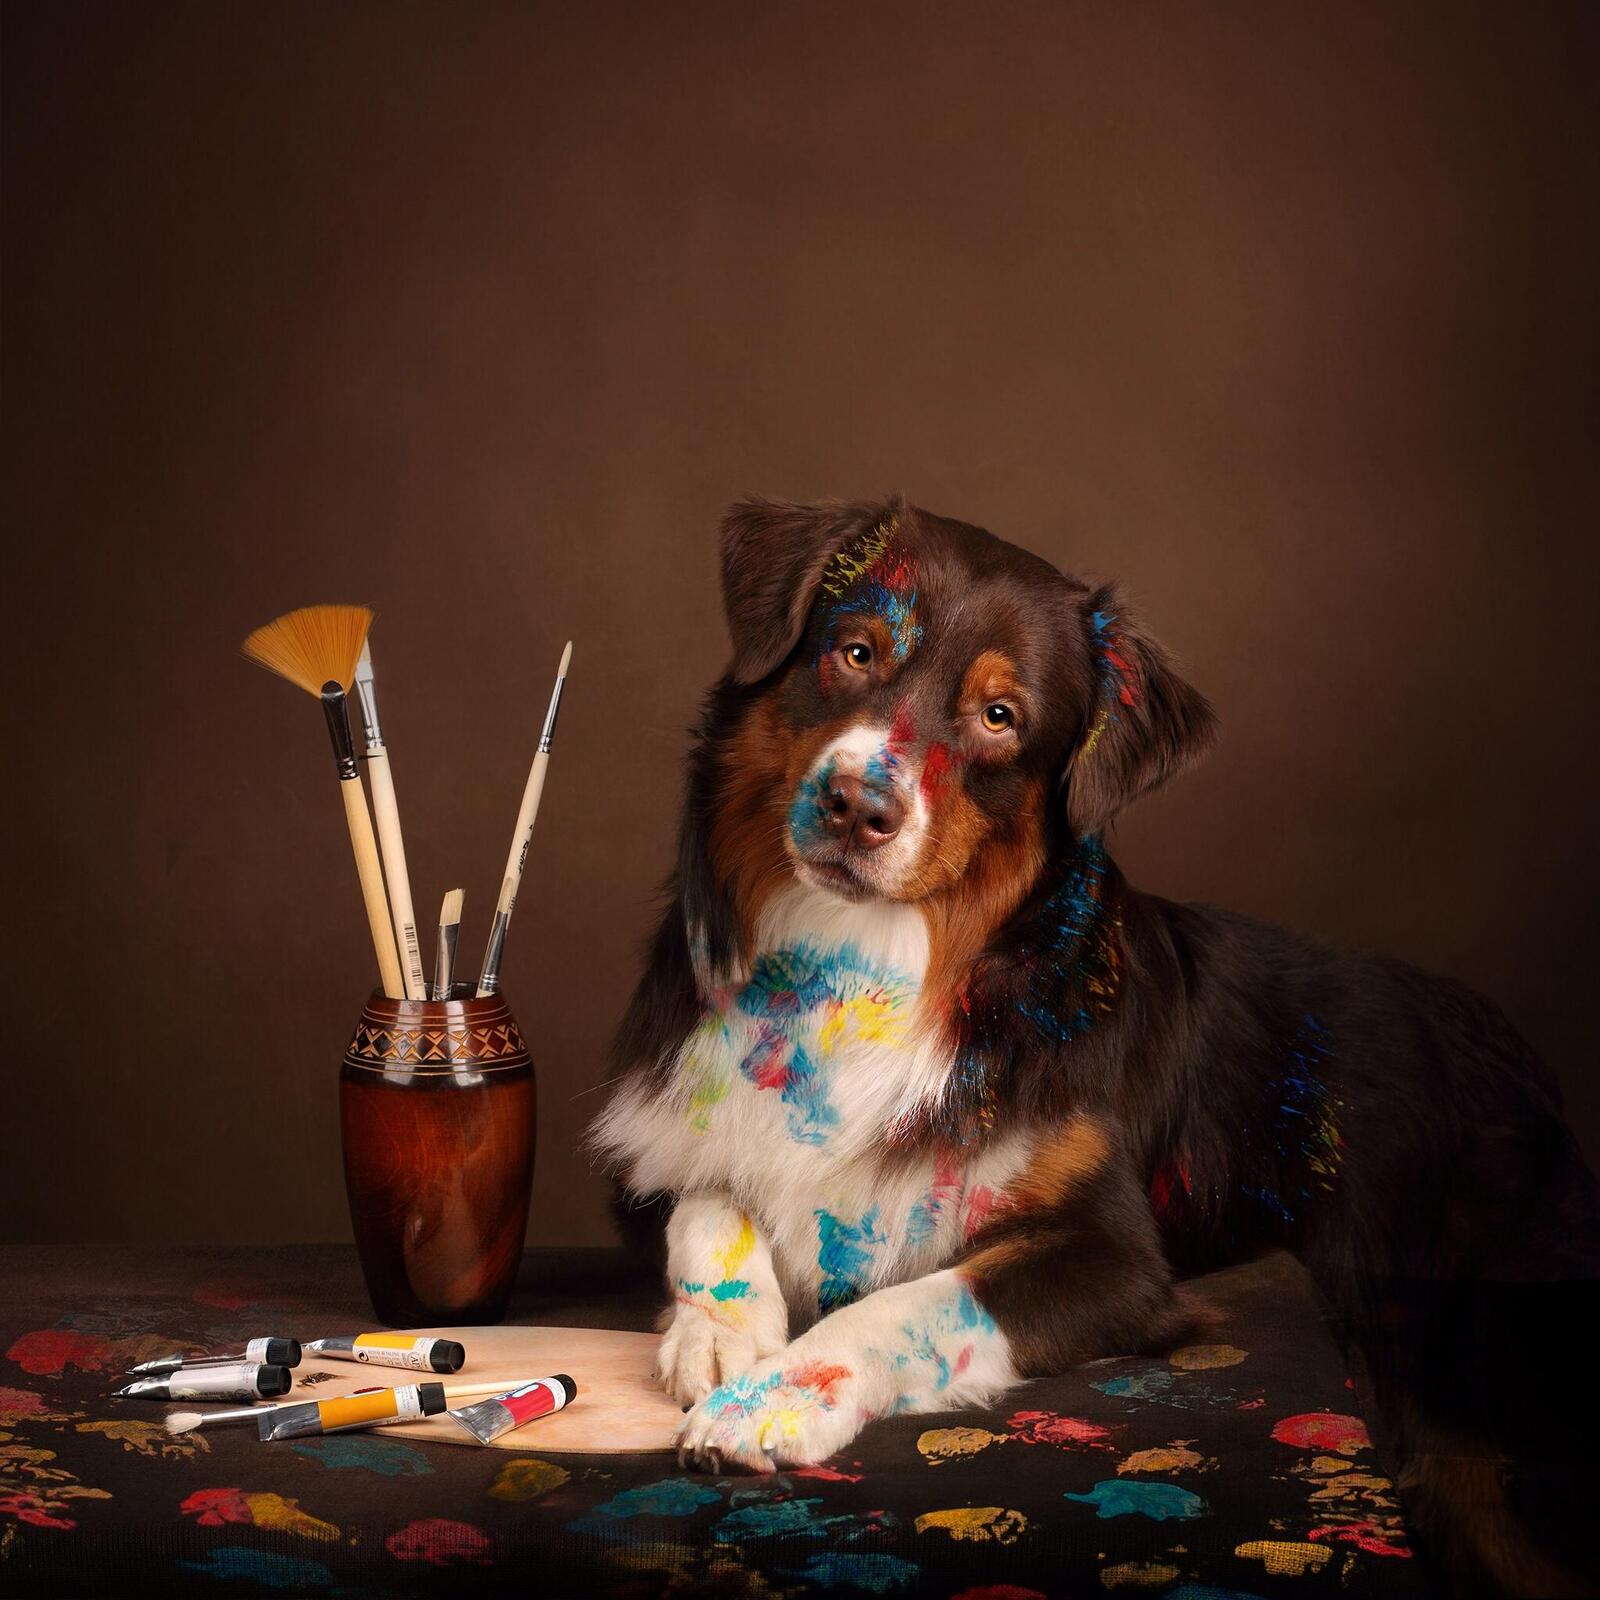 Wallpapers brush paint dog on the desktop